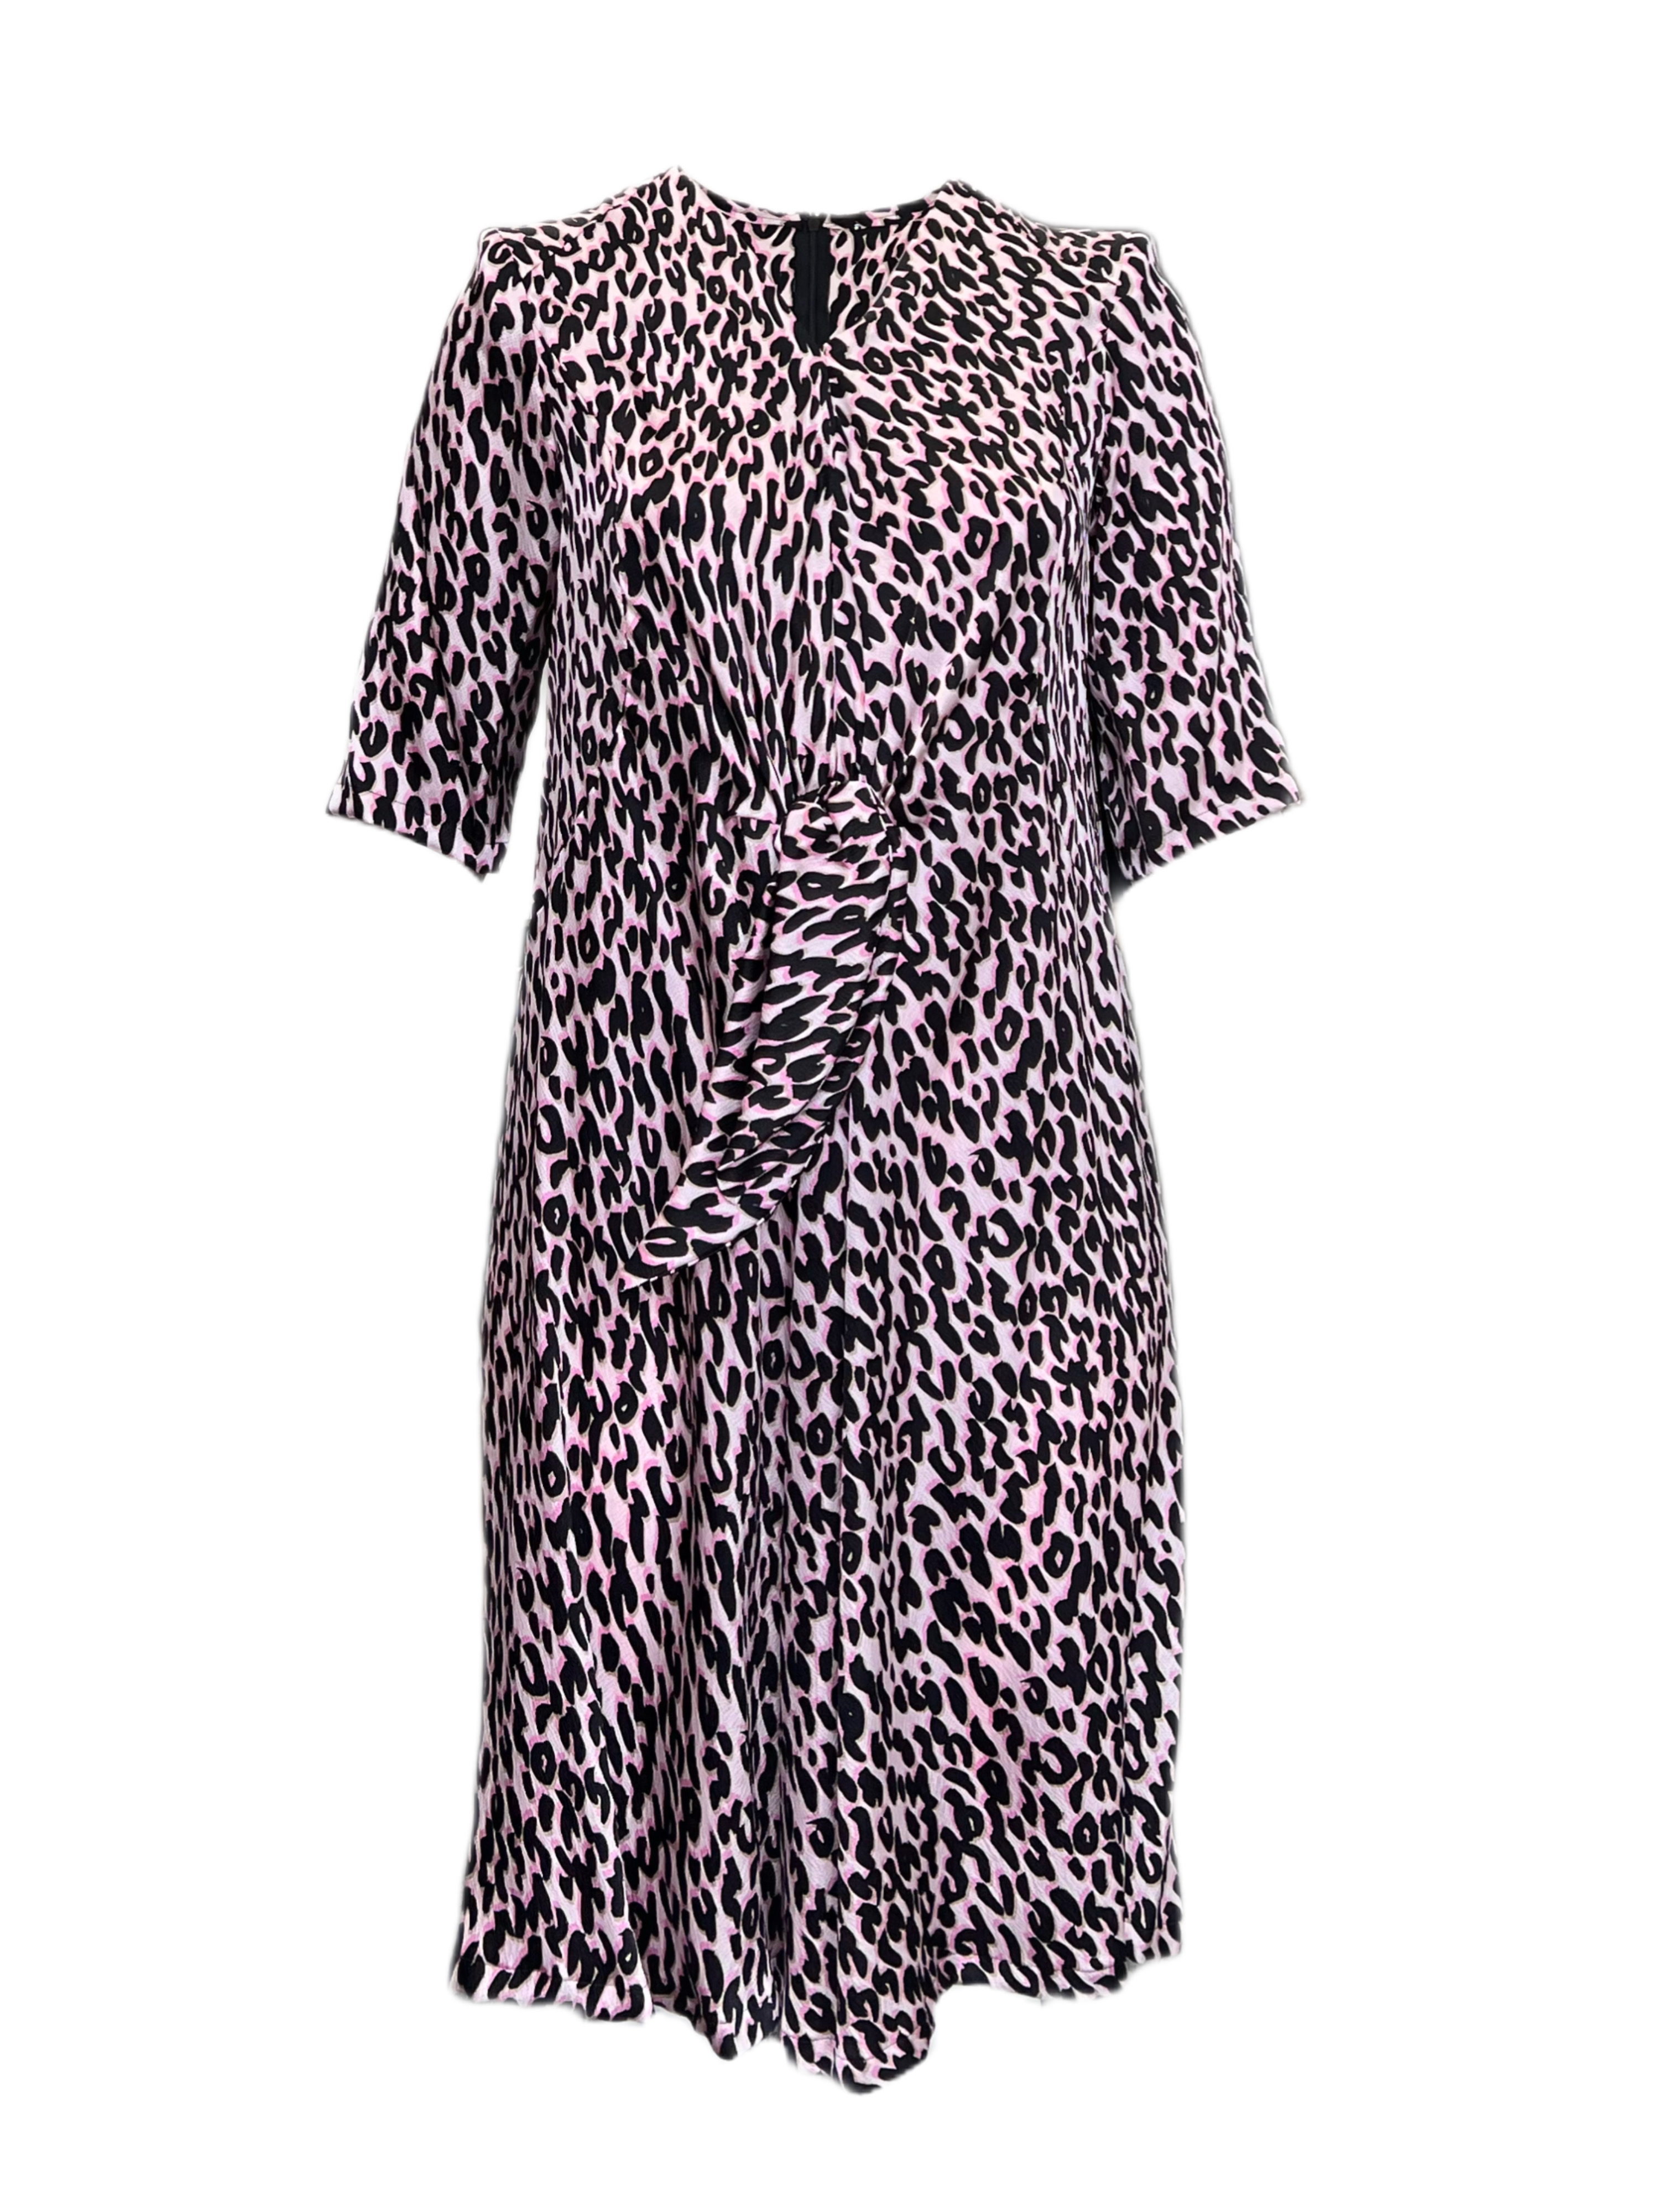 MARINA RINALDI by MaxMara Nixon Pink Animal Print V-Neck Dress | eBay